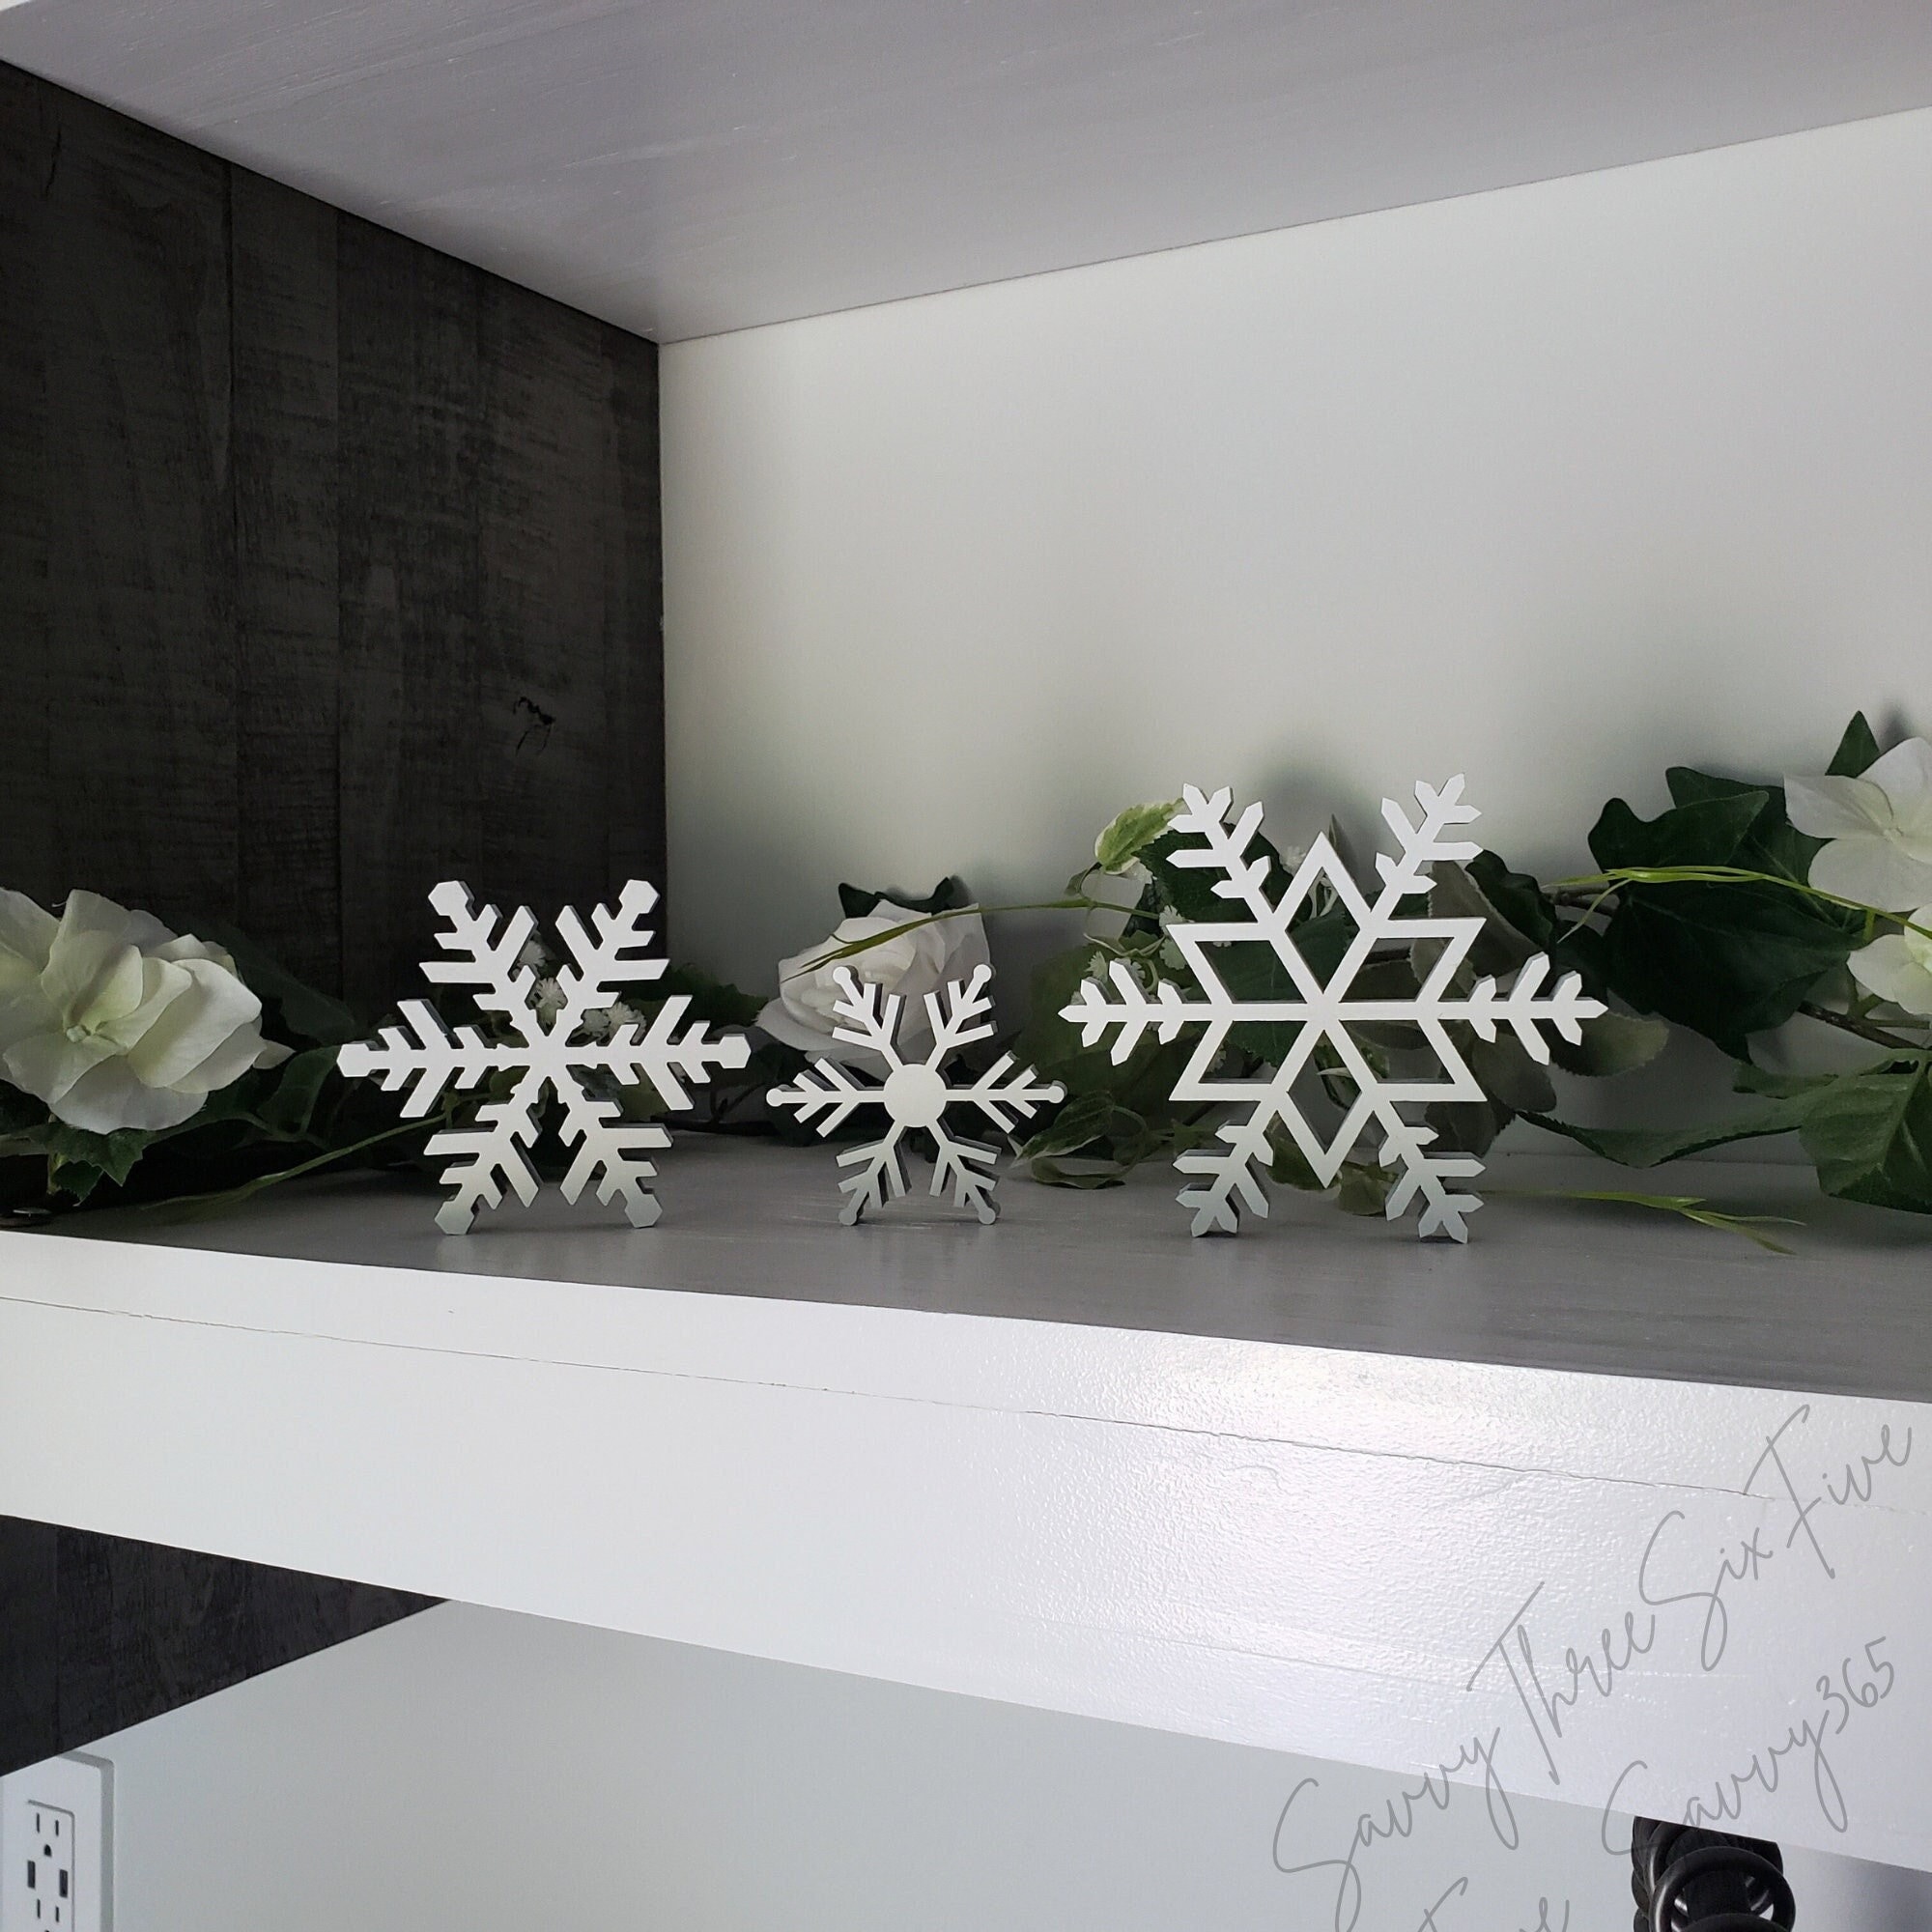 Sunset Vista Designs White Wooden Snowflake 18 